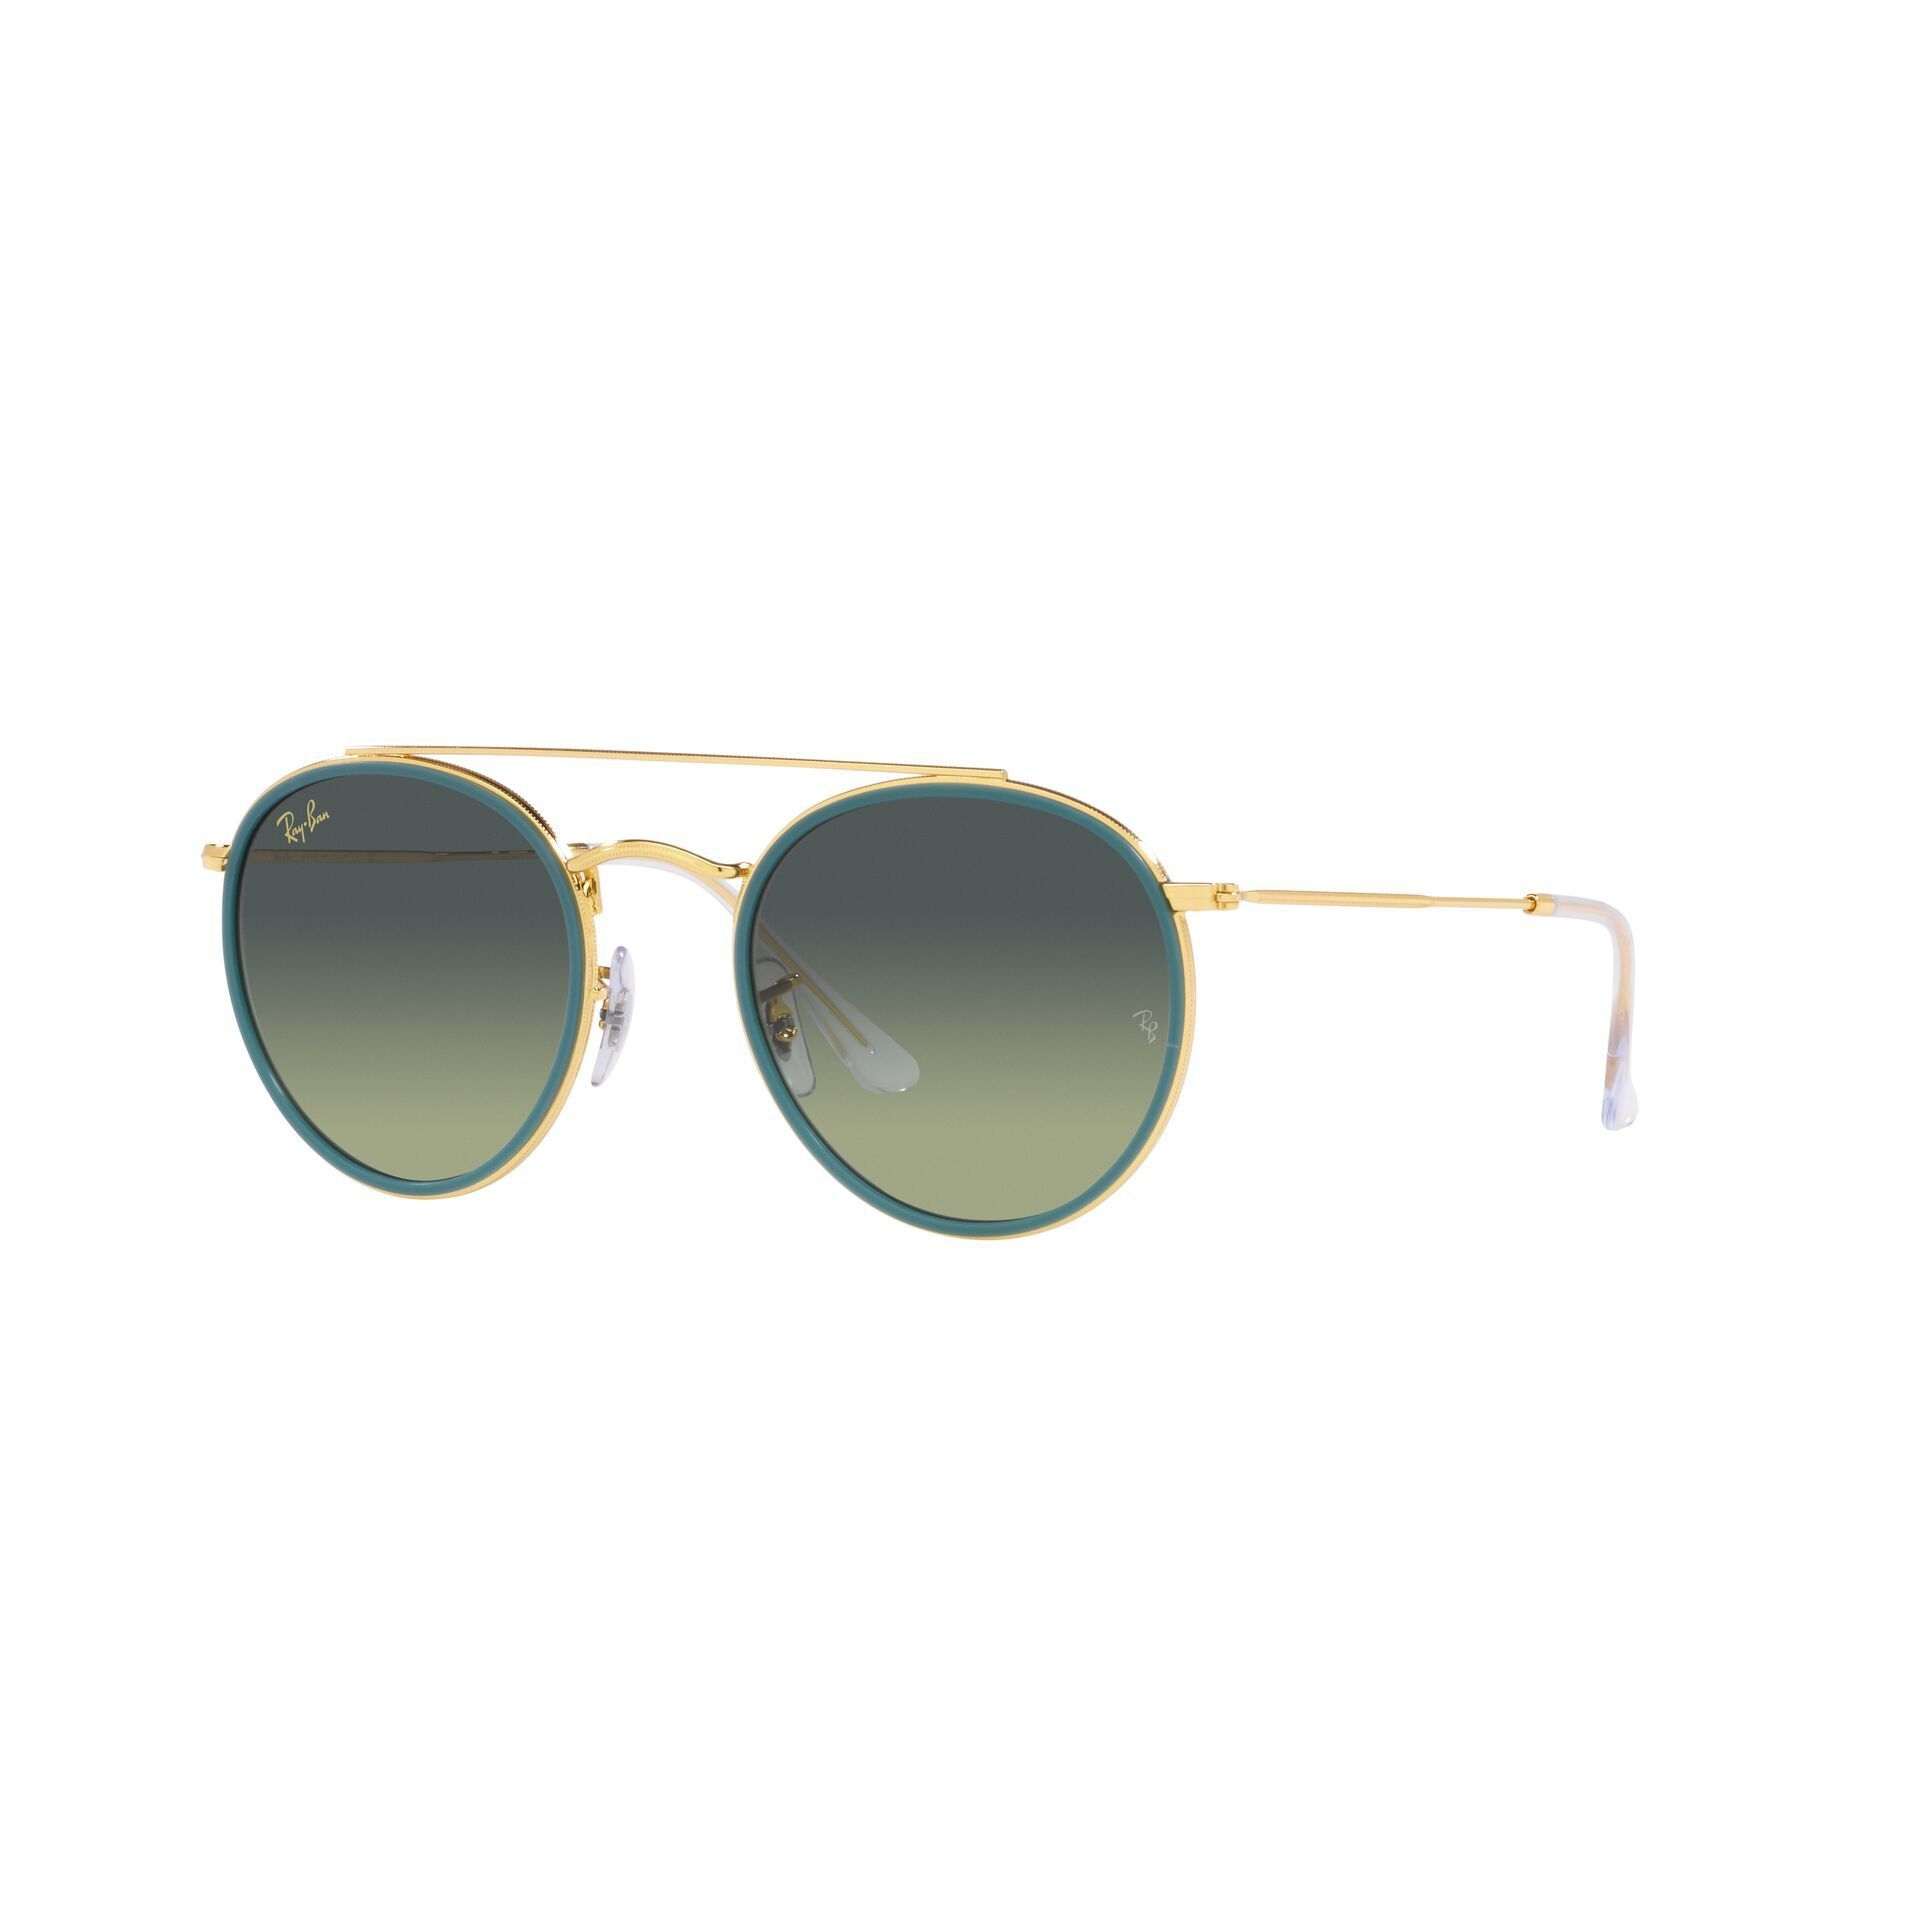 RB3647N  - Sunglasses 9235BH - size 51